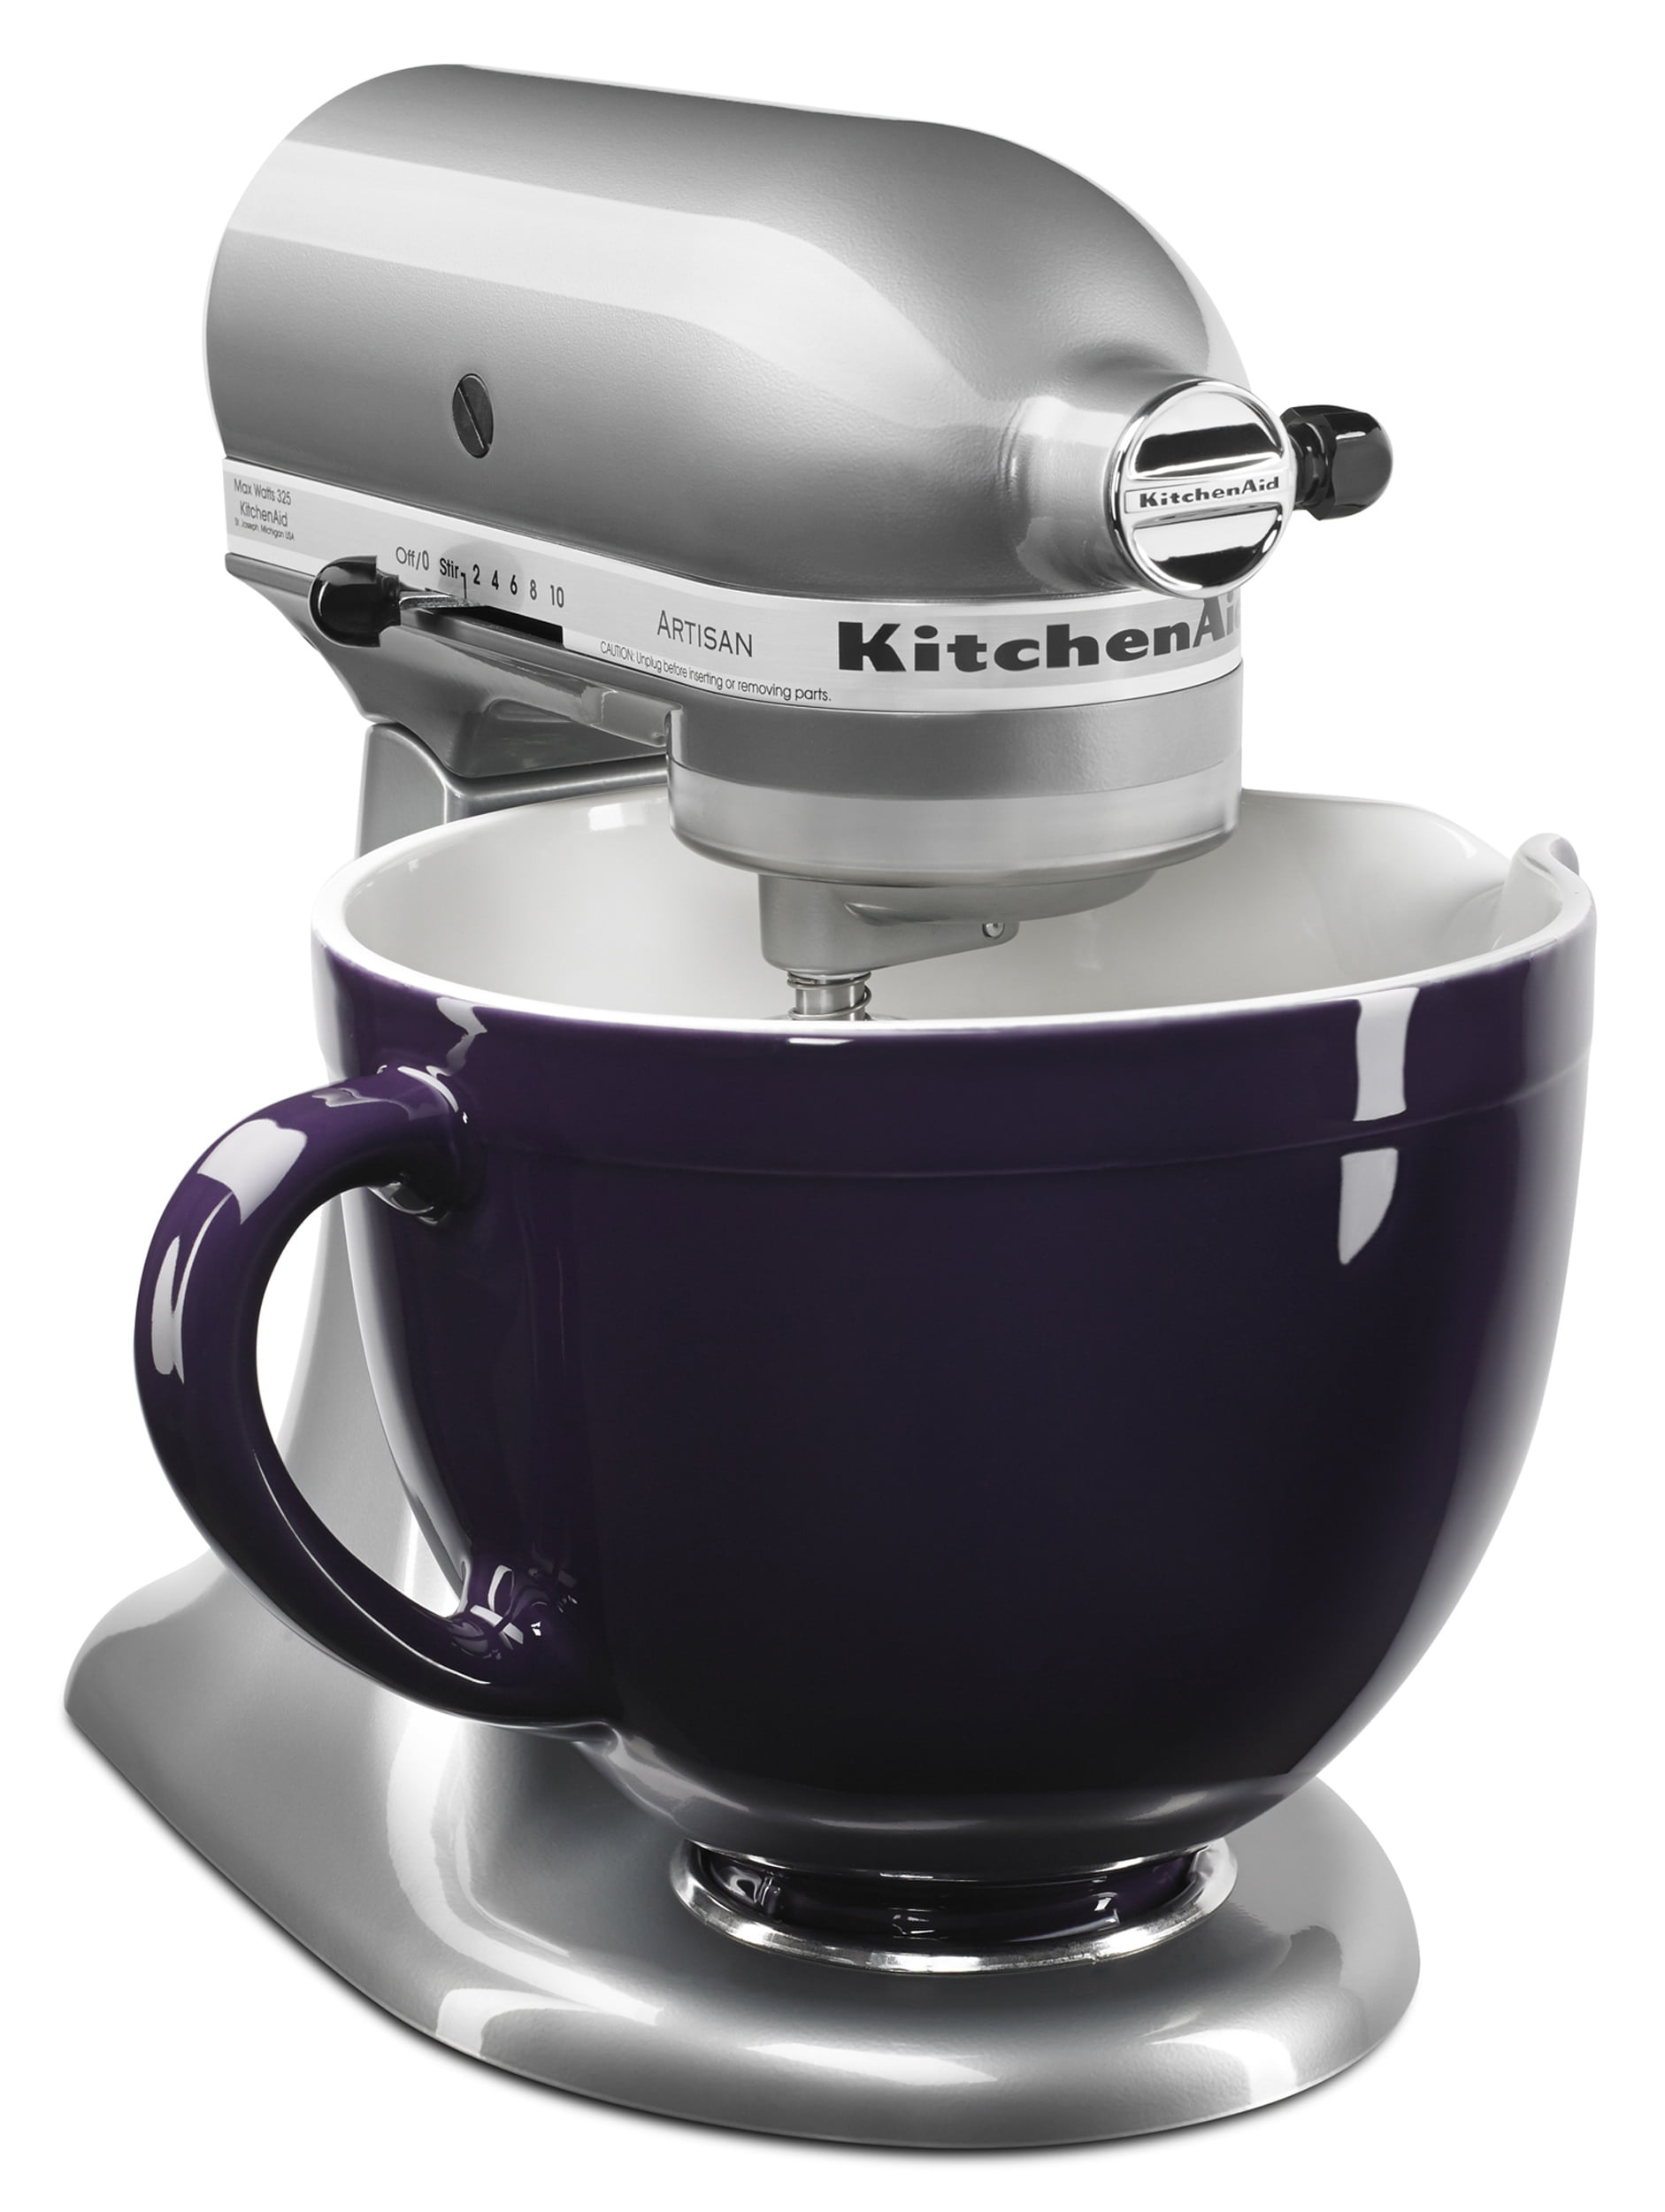 GVODE Ceramic Bowl for KitchenAid, Fit for Kitchenaid Mixer Bowl,  Replacement with Kitchenaid Bowl, 4.5-5Q with Kitchenaid Bowls for  Mixer-Classic